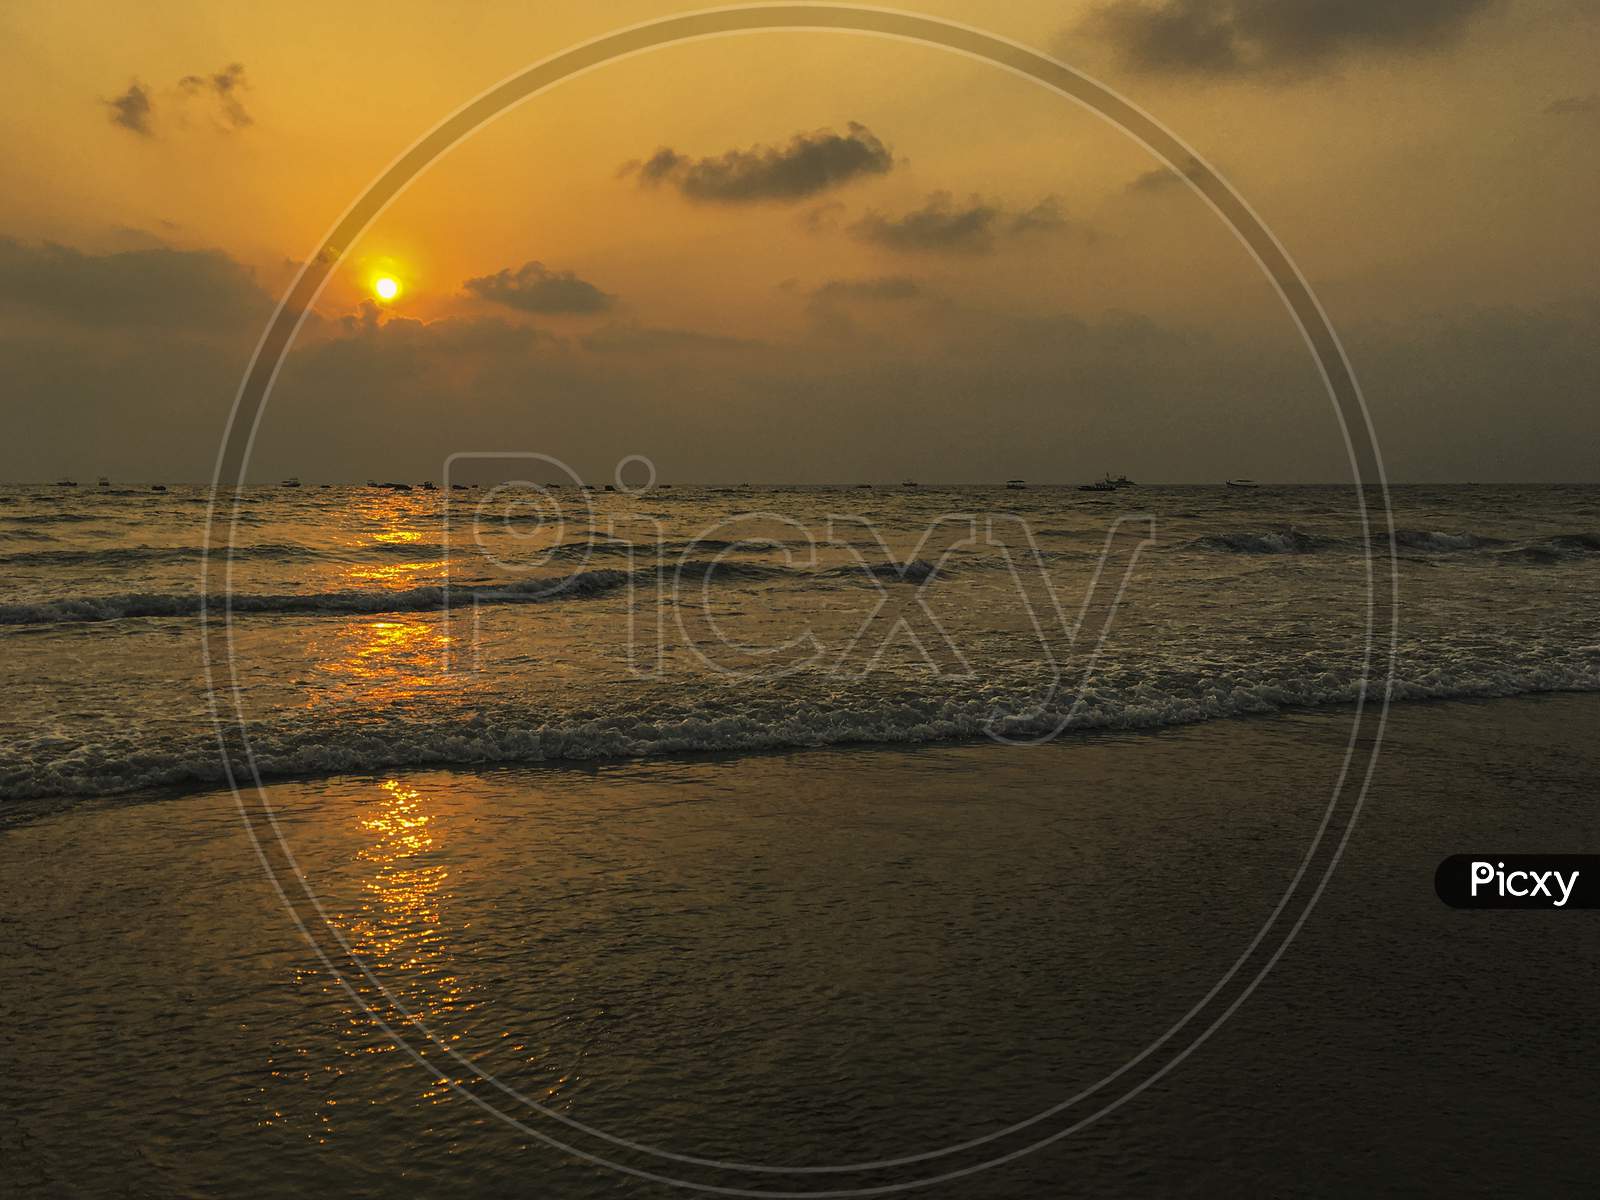 Sunset at Colva Beach, Goa